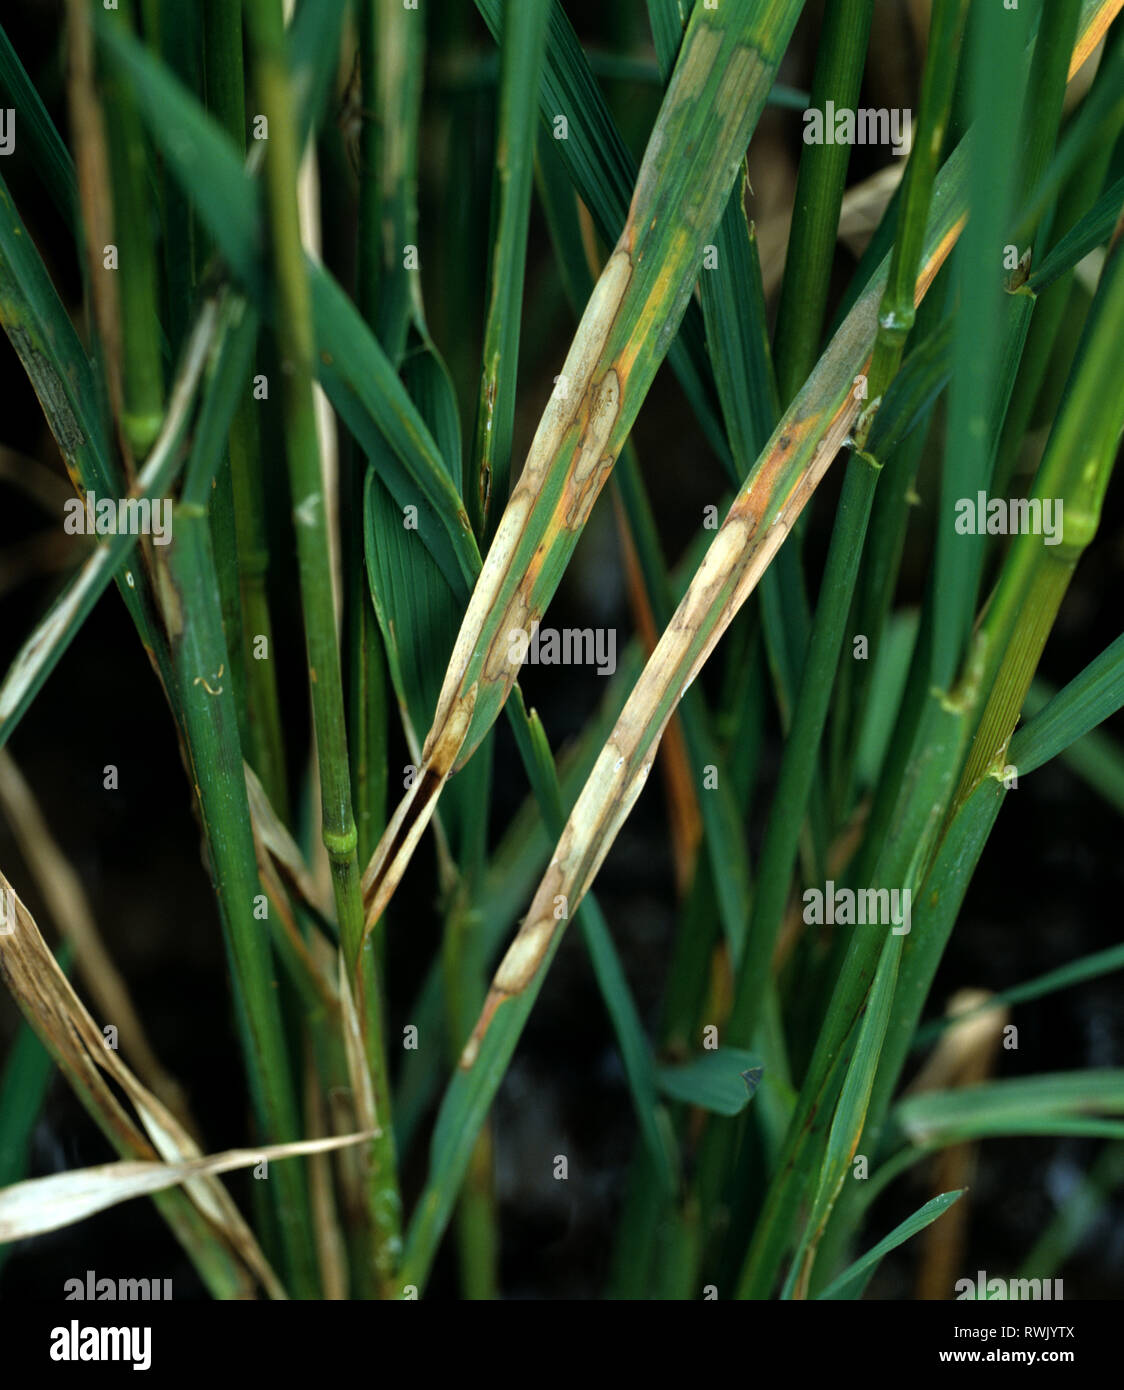 Sheath blight (Thanatephorus cucumeris) infection on rice plants Stock Photo